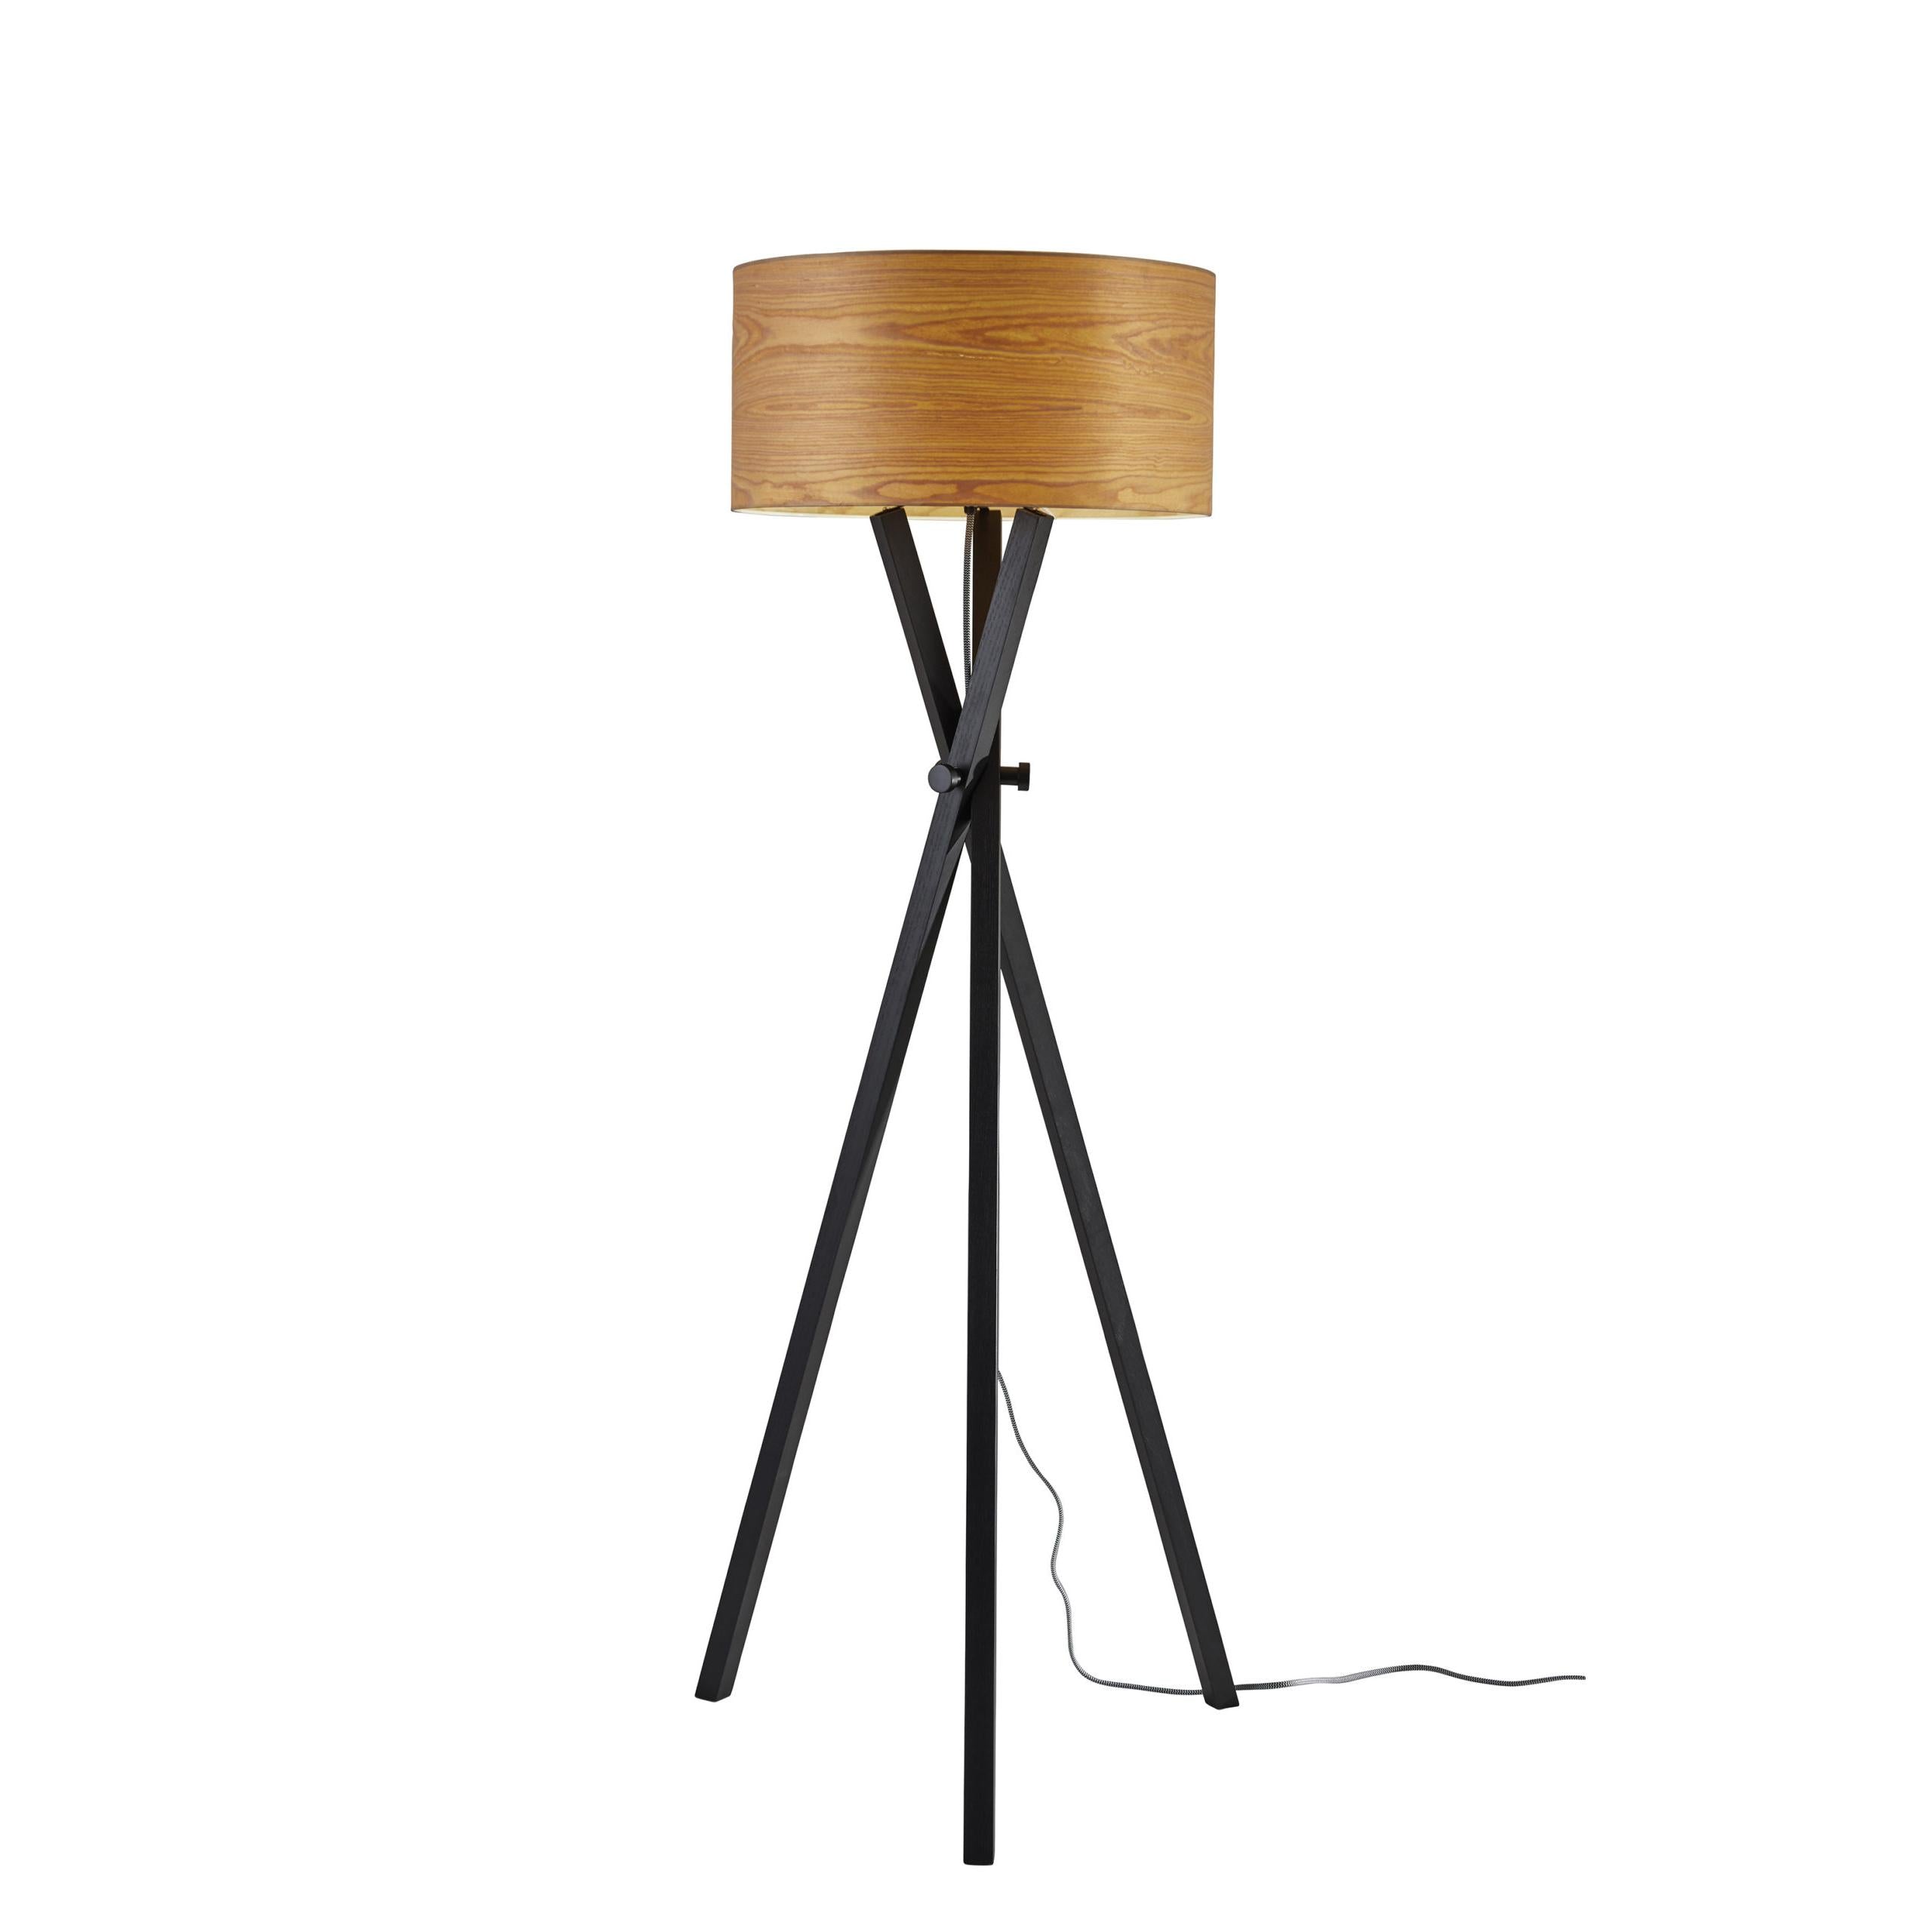 OSLO Floor lamp Black, Wood - 6207-01 | ADESSO